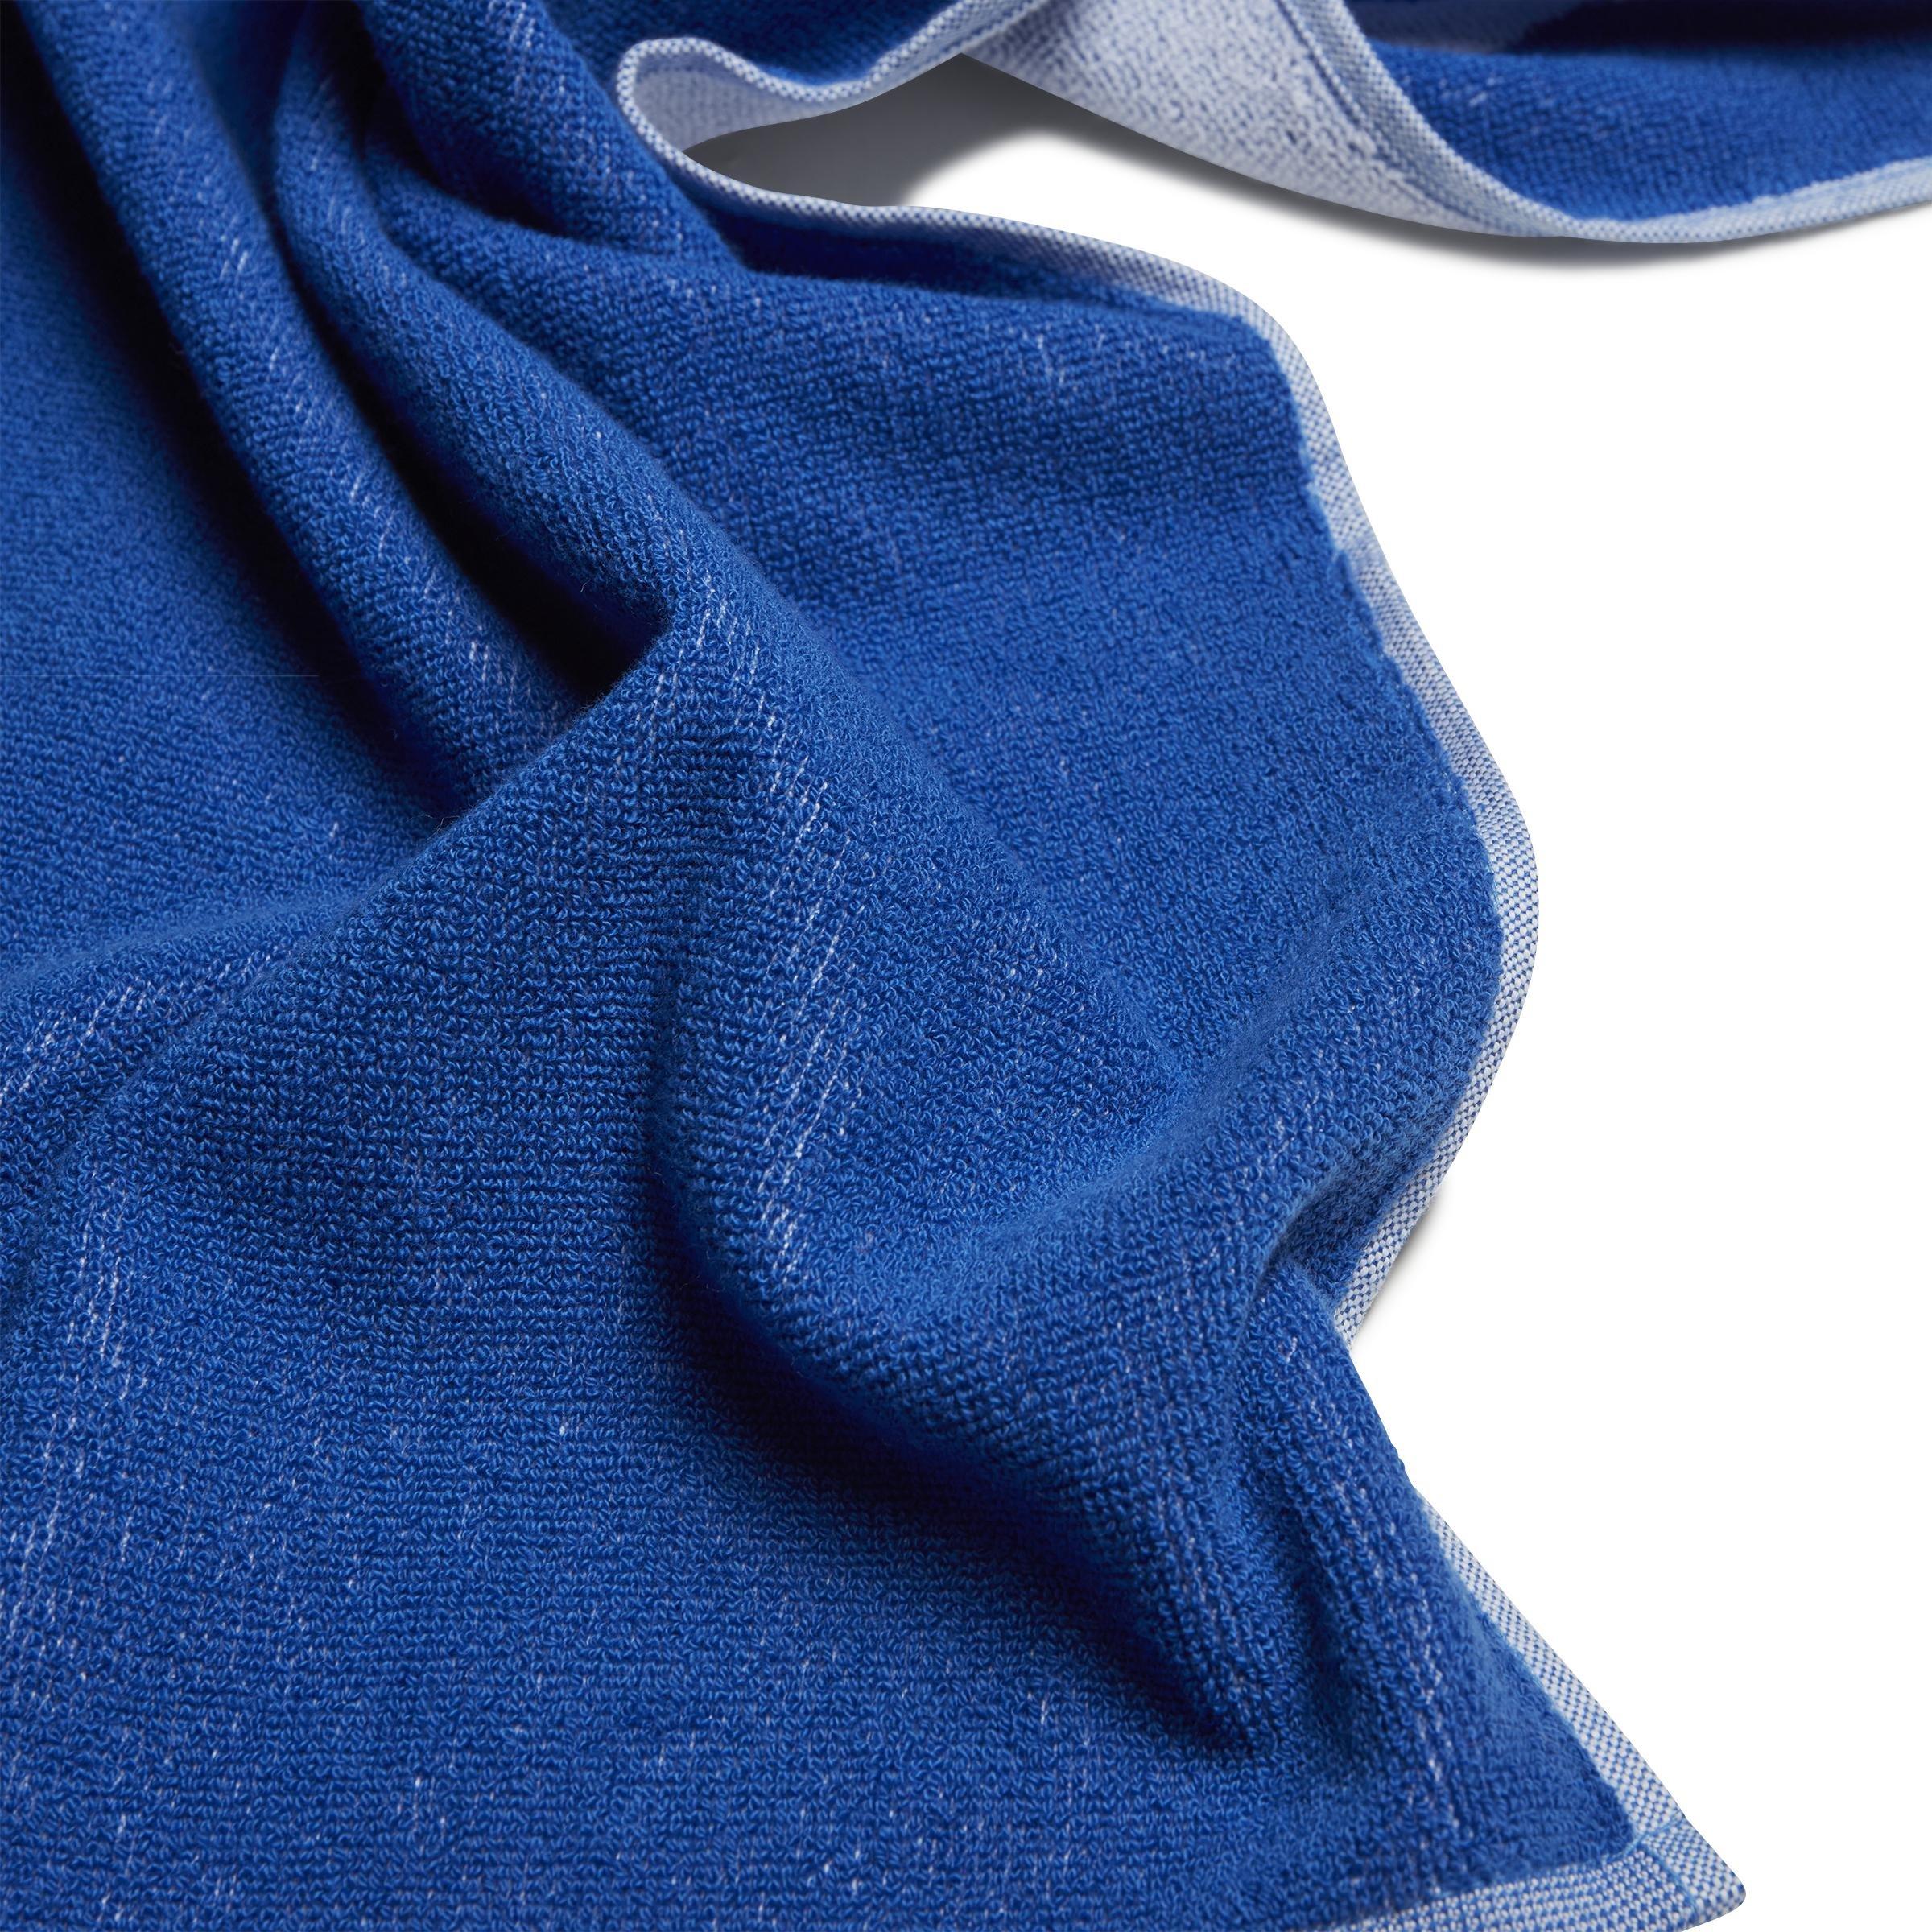 adidas - Unisex Adidas Towel Small, Blue